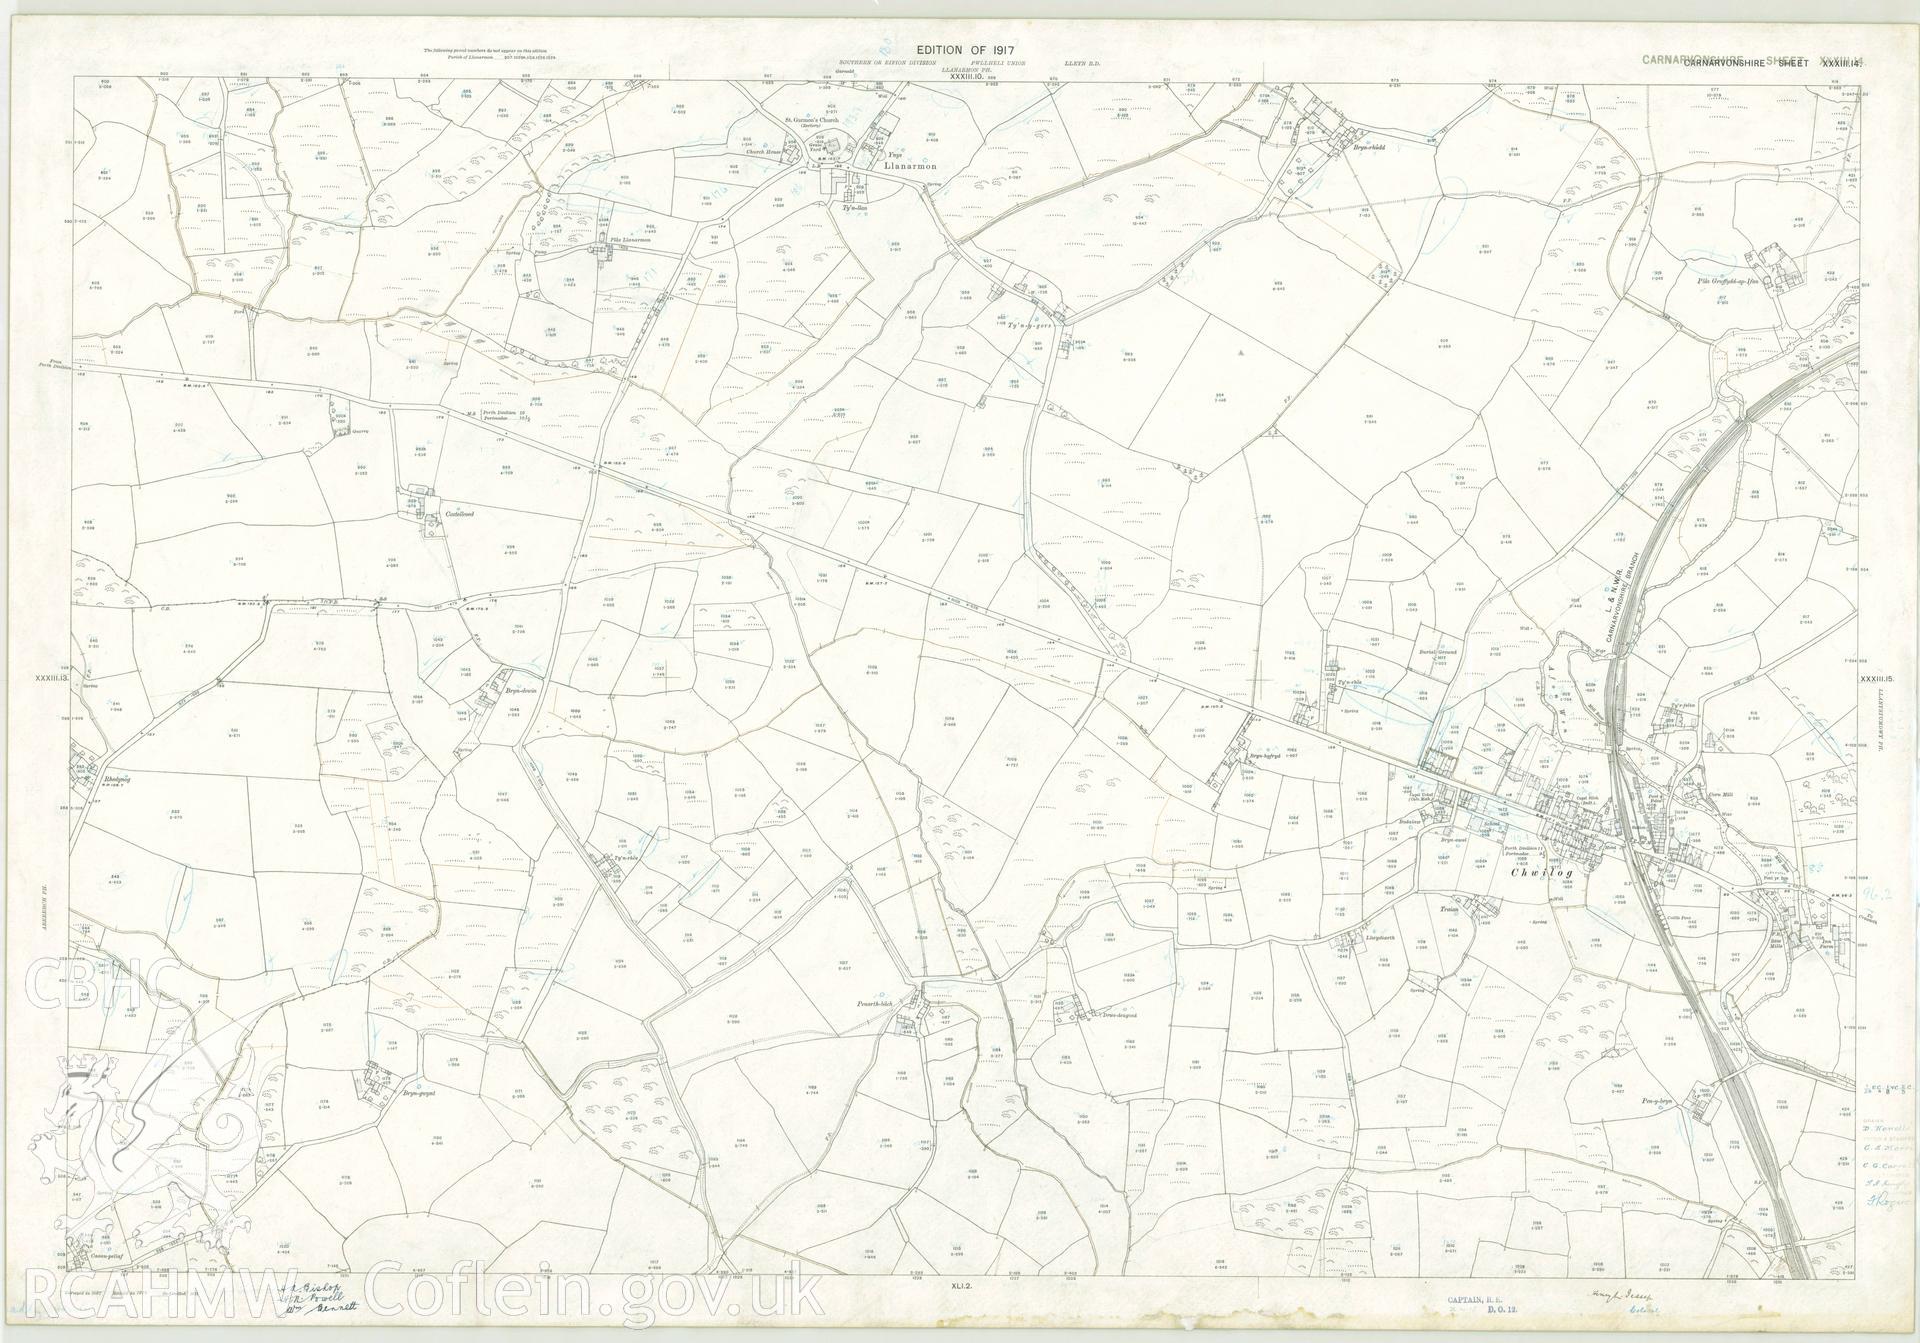 Digitized copy of Ordnance Survey 25 inch coloured map of Chwilog area 1917. Original size.